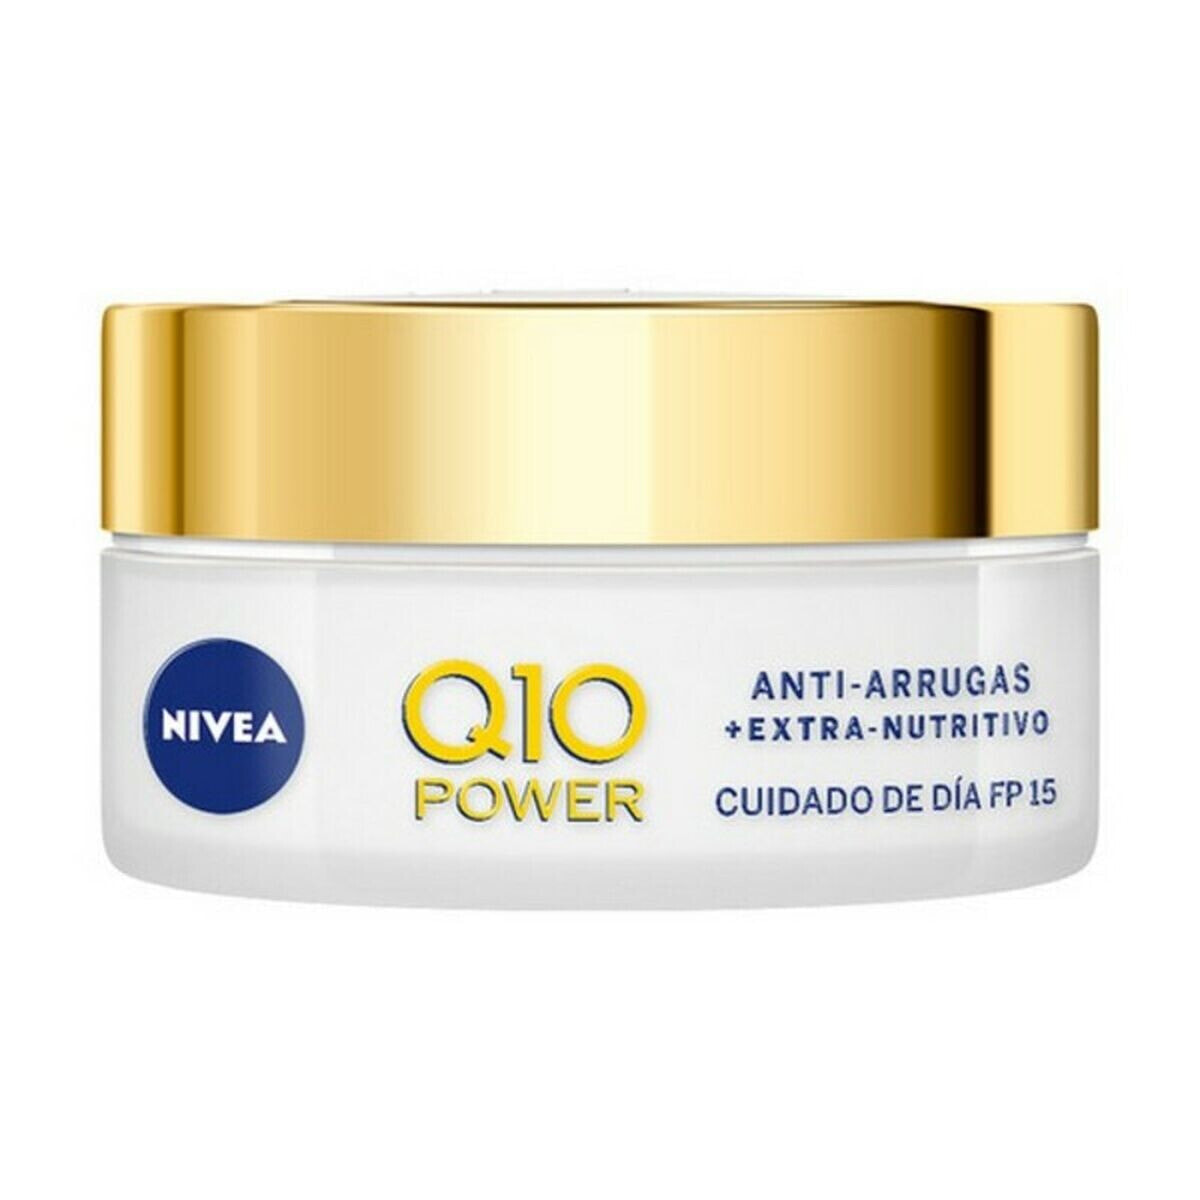 Anti-Wrinkle Cream Q10 Power Nivea 1017-64259 (50 ml) Spf 15 50 ml